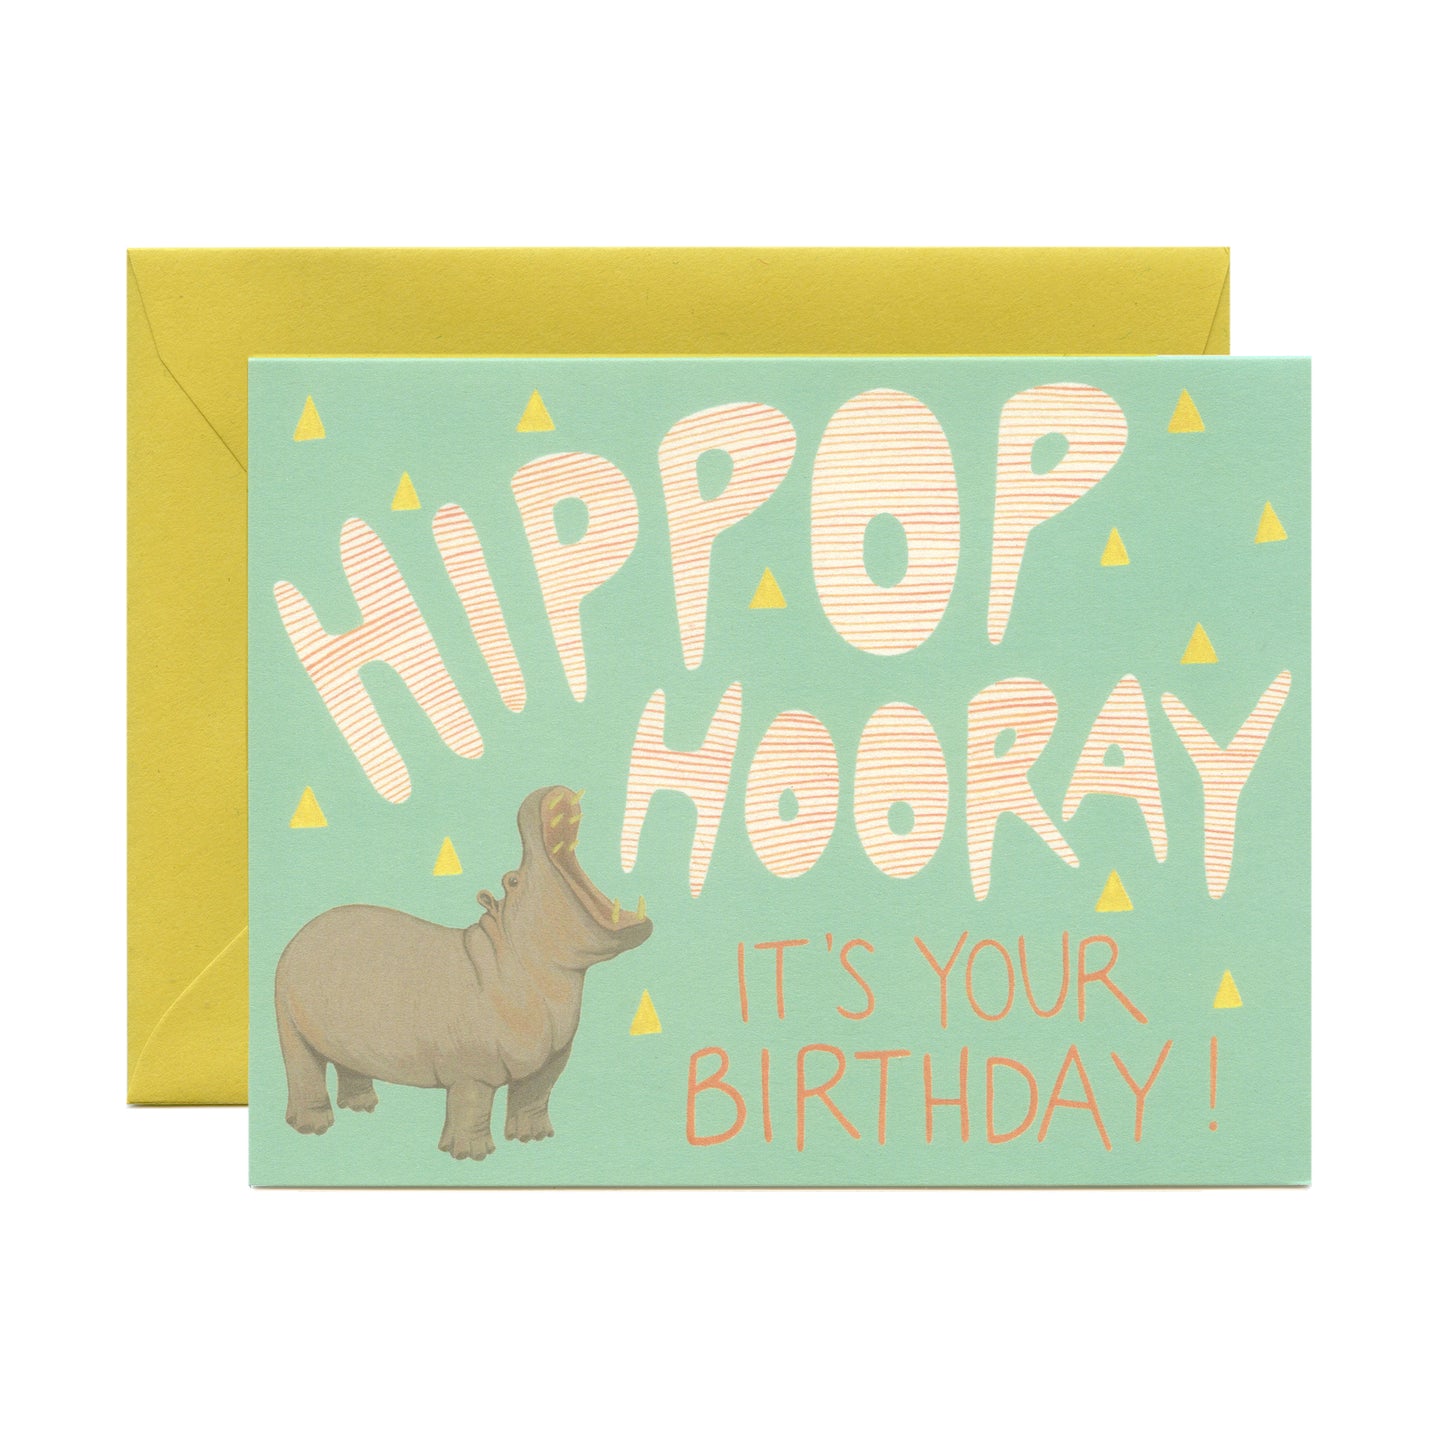 HIPPOP HOORAY HIPPO - BIRTHDAY GREETING CARD